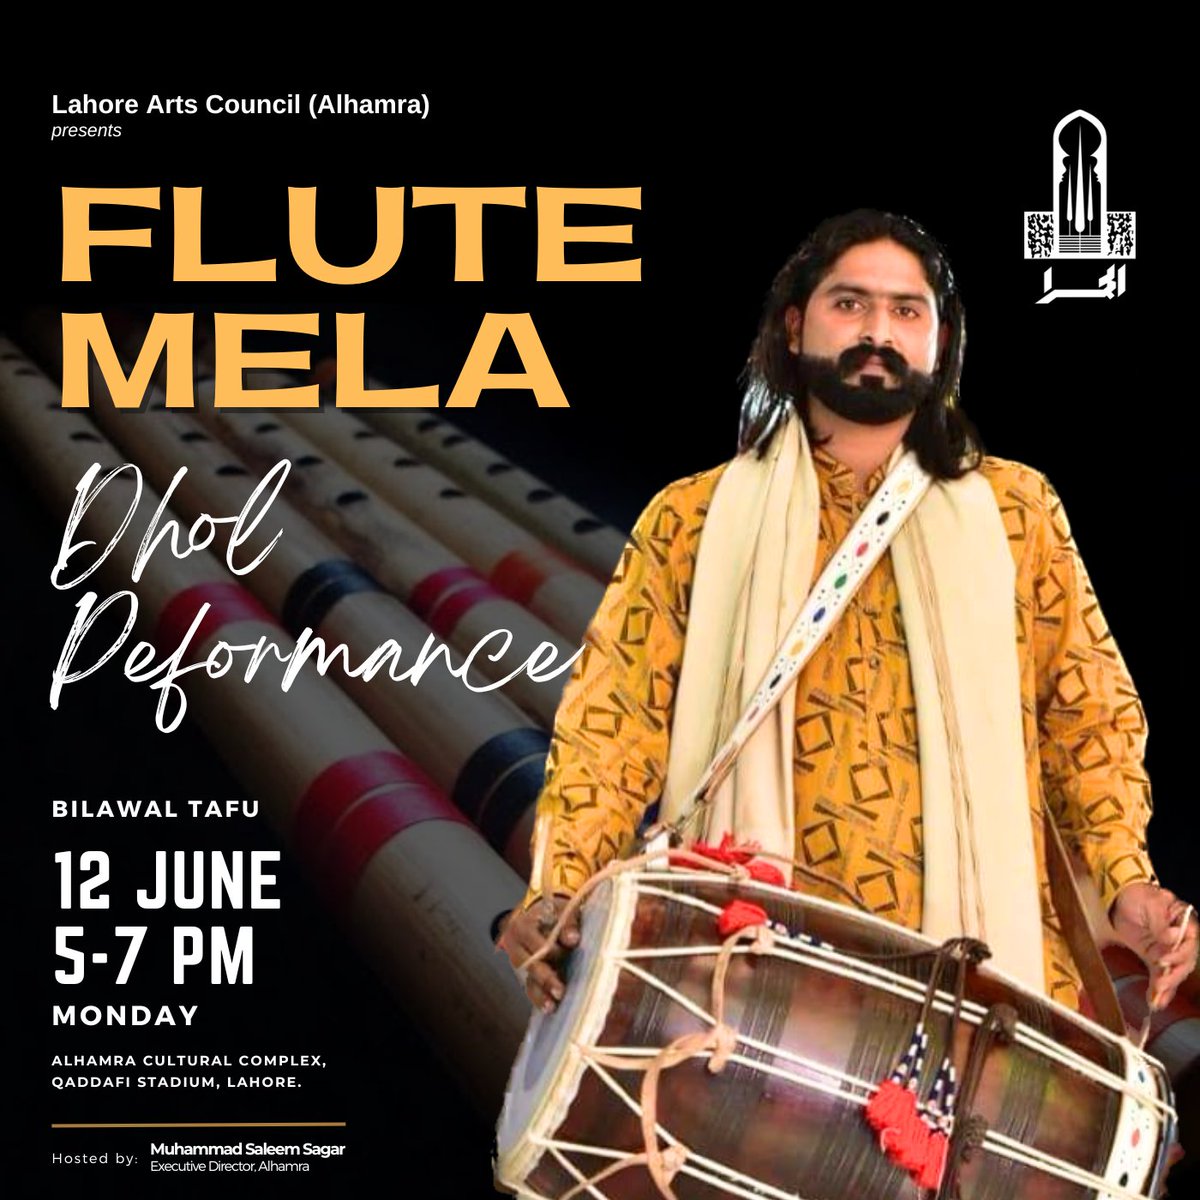 @AlhamraLAC presents

Dhol Performance on 'FLUTE MELA'

On Monday 12th June 2023
Time: 3:00 - 7:00 PM 

Venue: Alhamra Cultural Complex, Qaddafi Stadium,Lahore

#EntryFree 

#alhamra #mela #flute #flutemela #exhibition #musicalshow #seminar #artist #fluteplayer